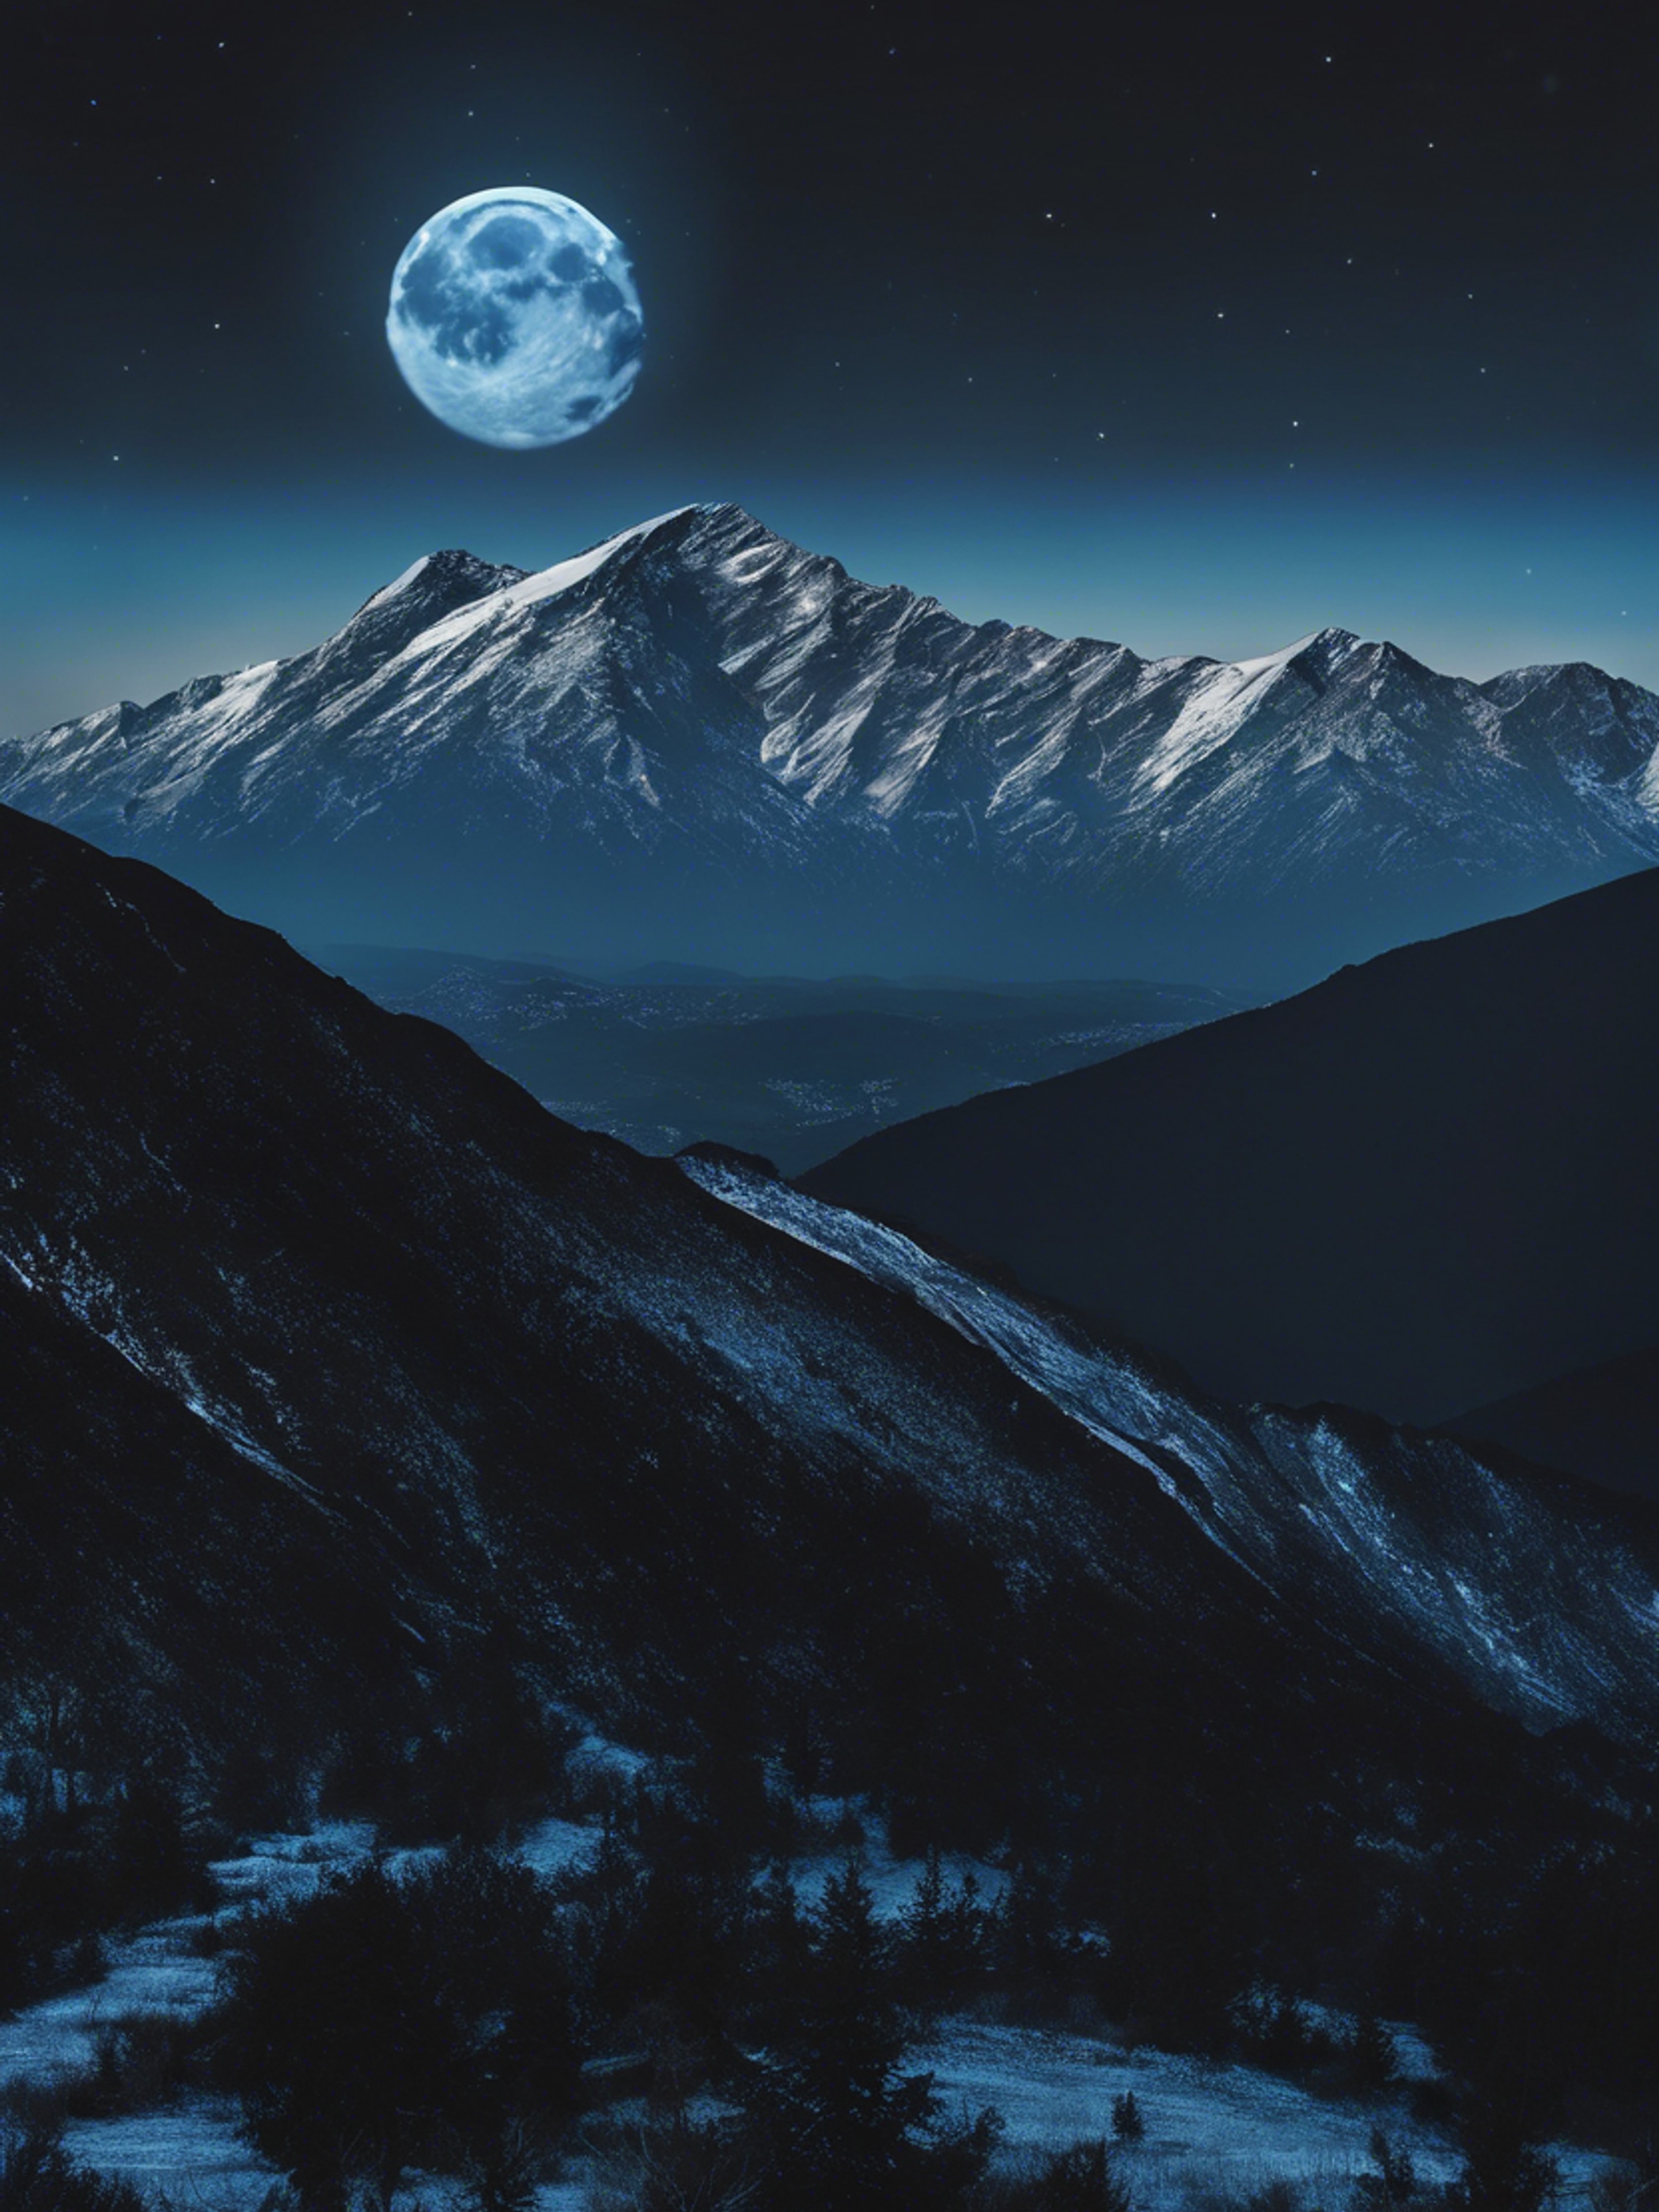 A calm blue moon illuminating the black silhouette of a serene mountain range. Hintergrund[e9e6a71abde94eeebdbf]